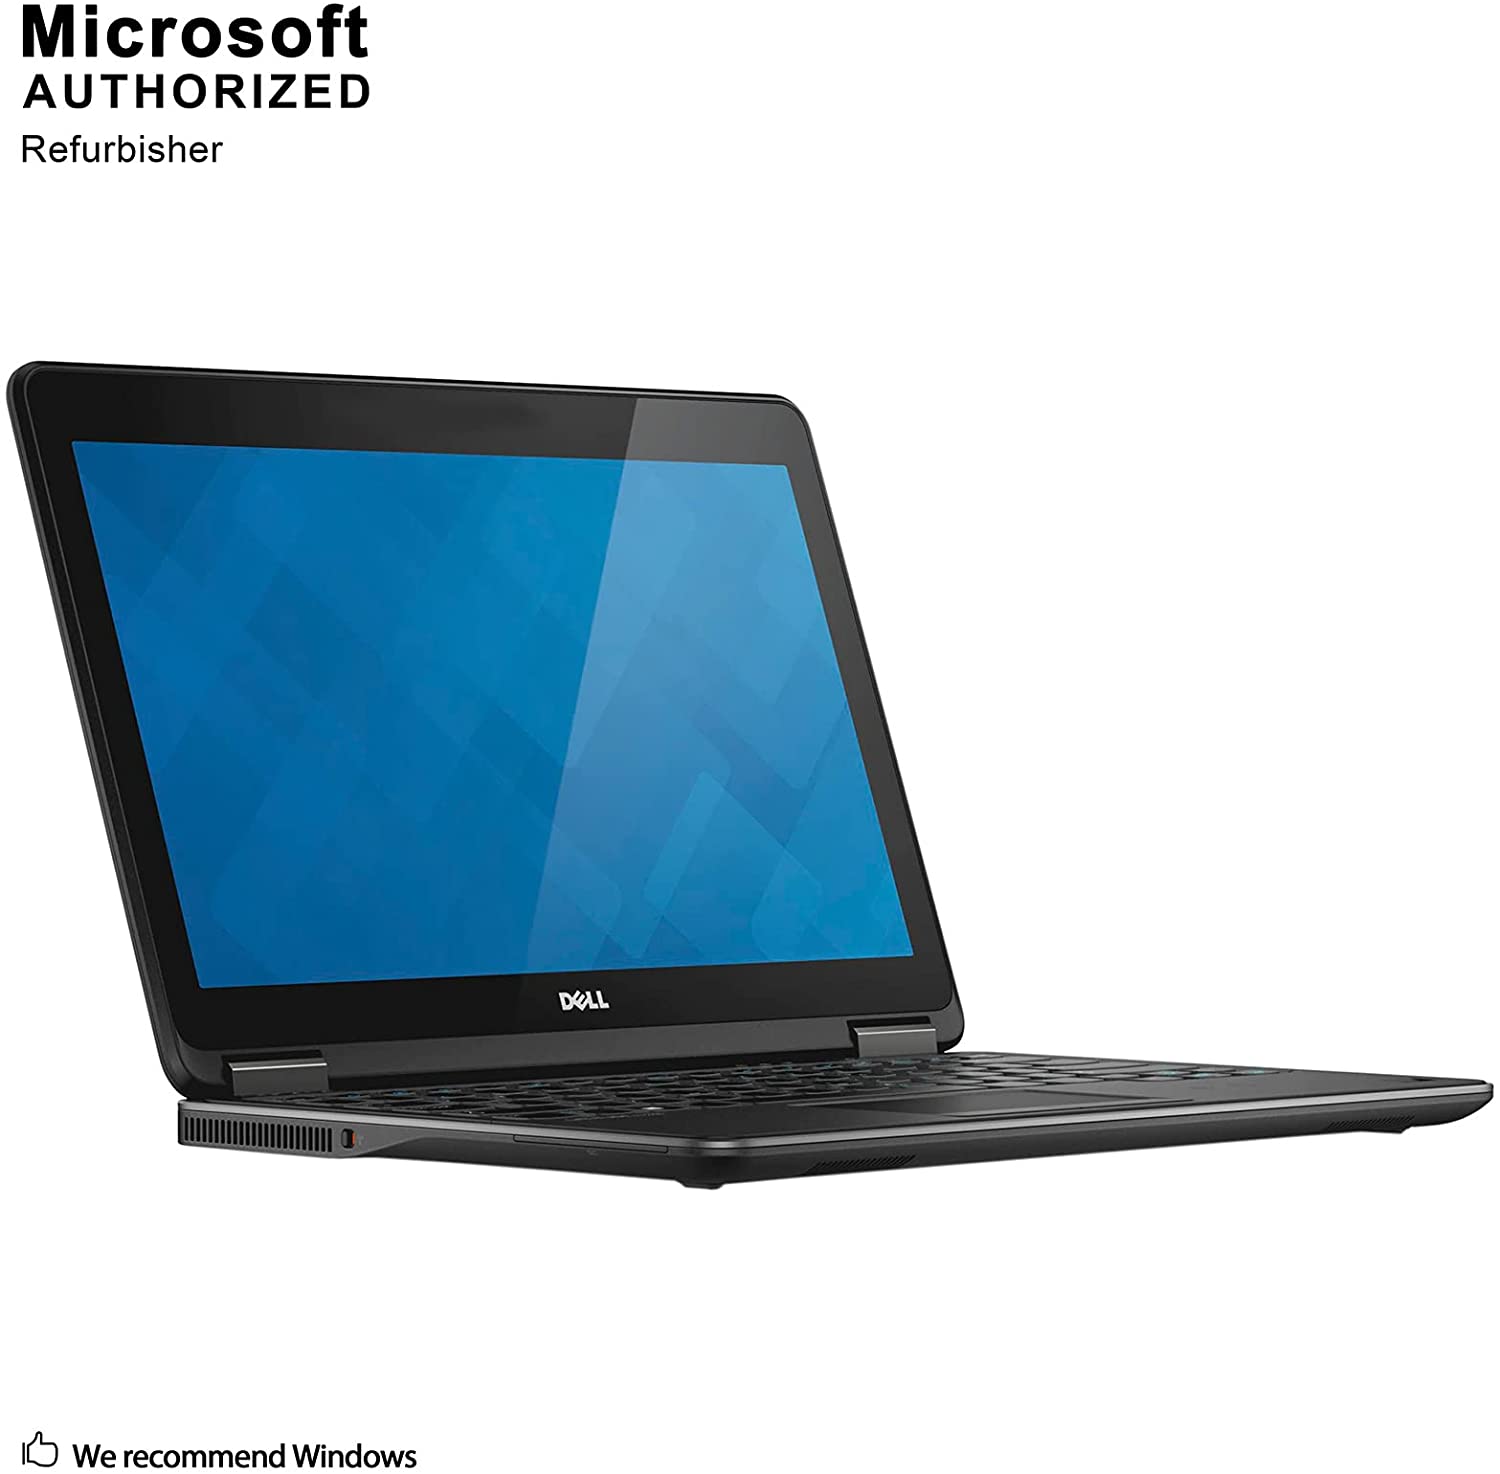 Dell Latitude E7240 Ultrabook PC - Intel Core i5-4300U 1.9GHz 8GB 256GB SSD Windows 10 Professional (Renewed)